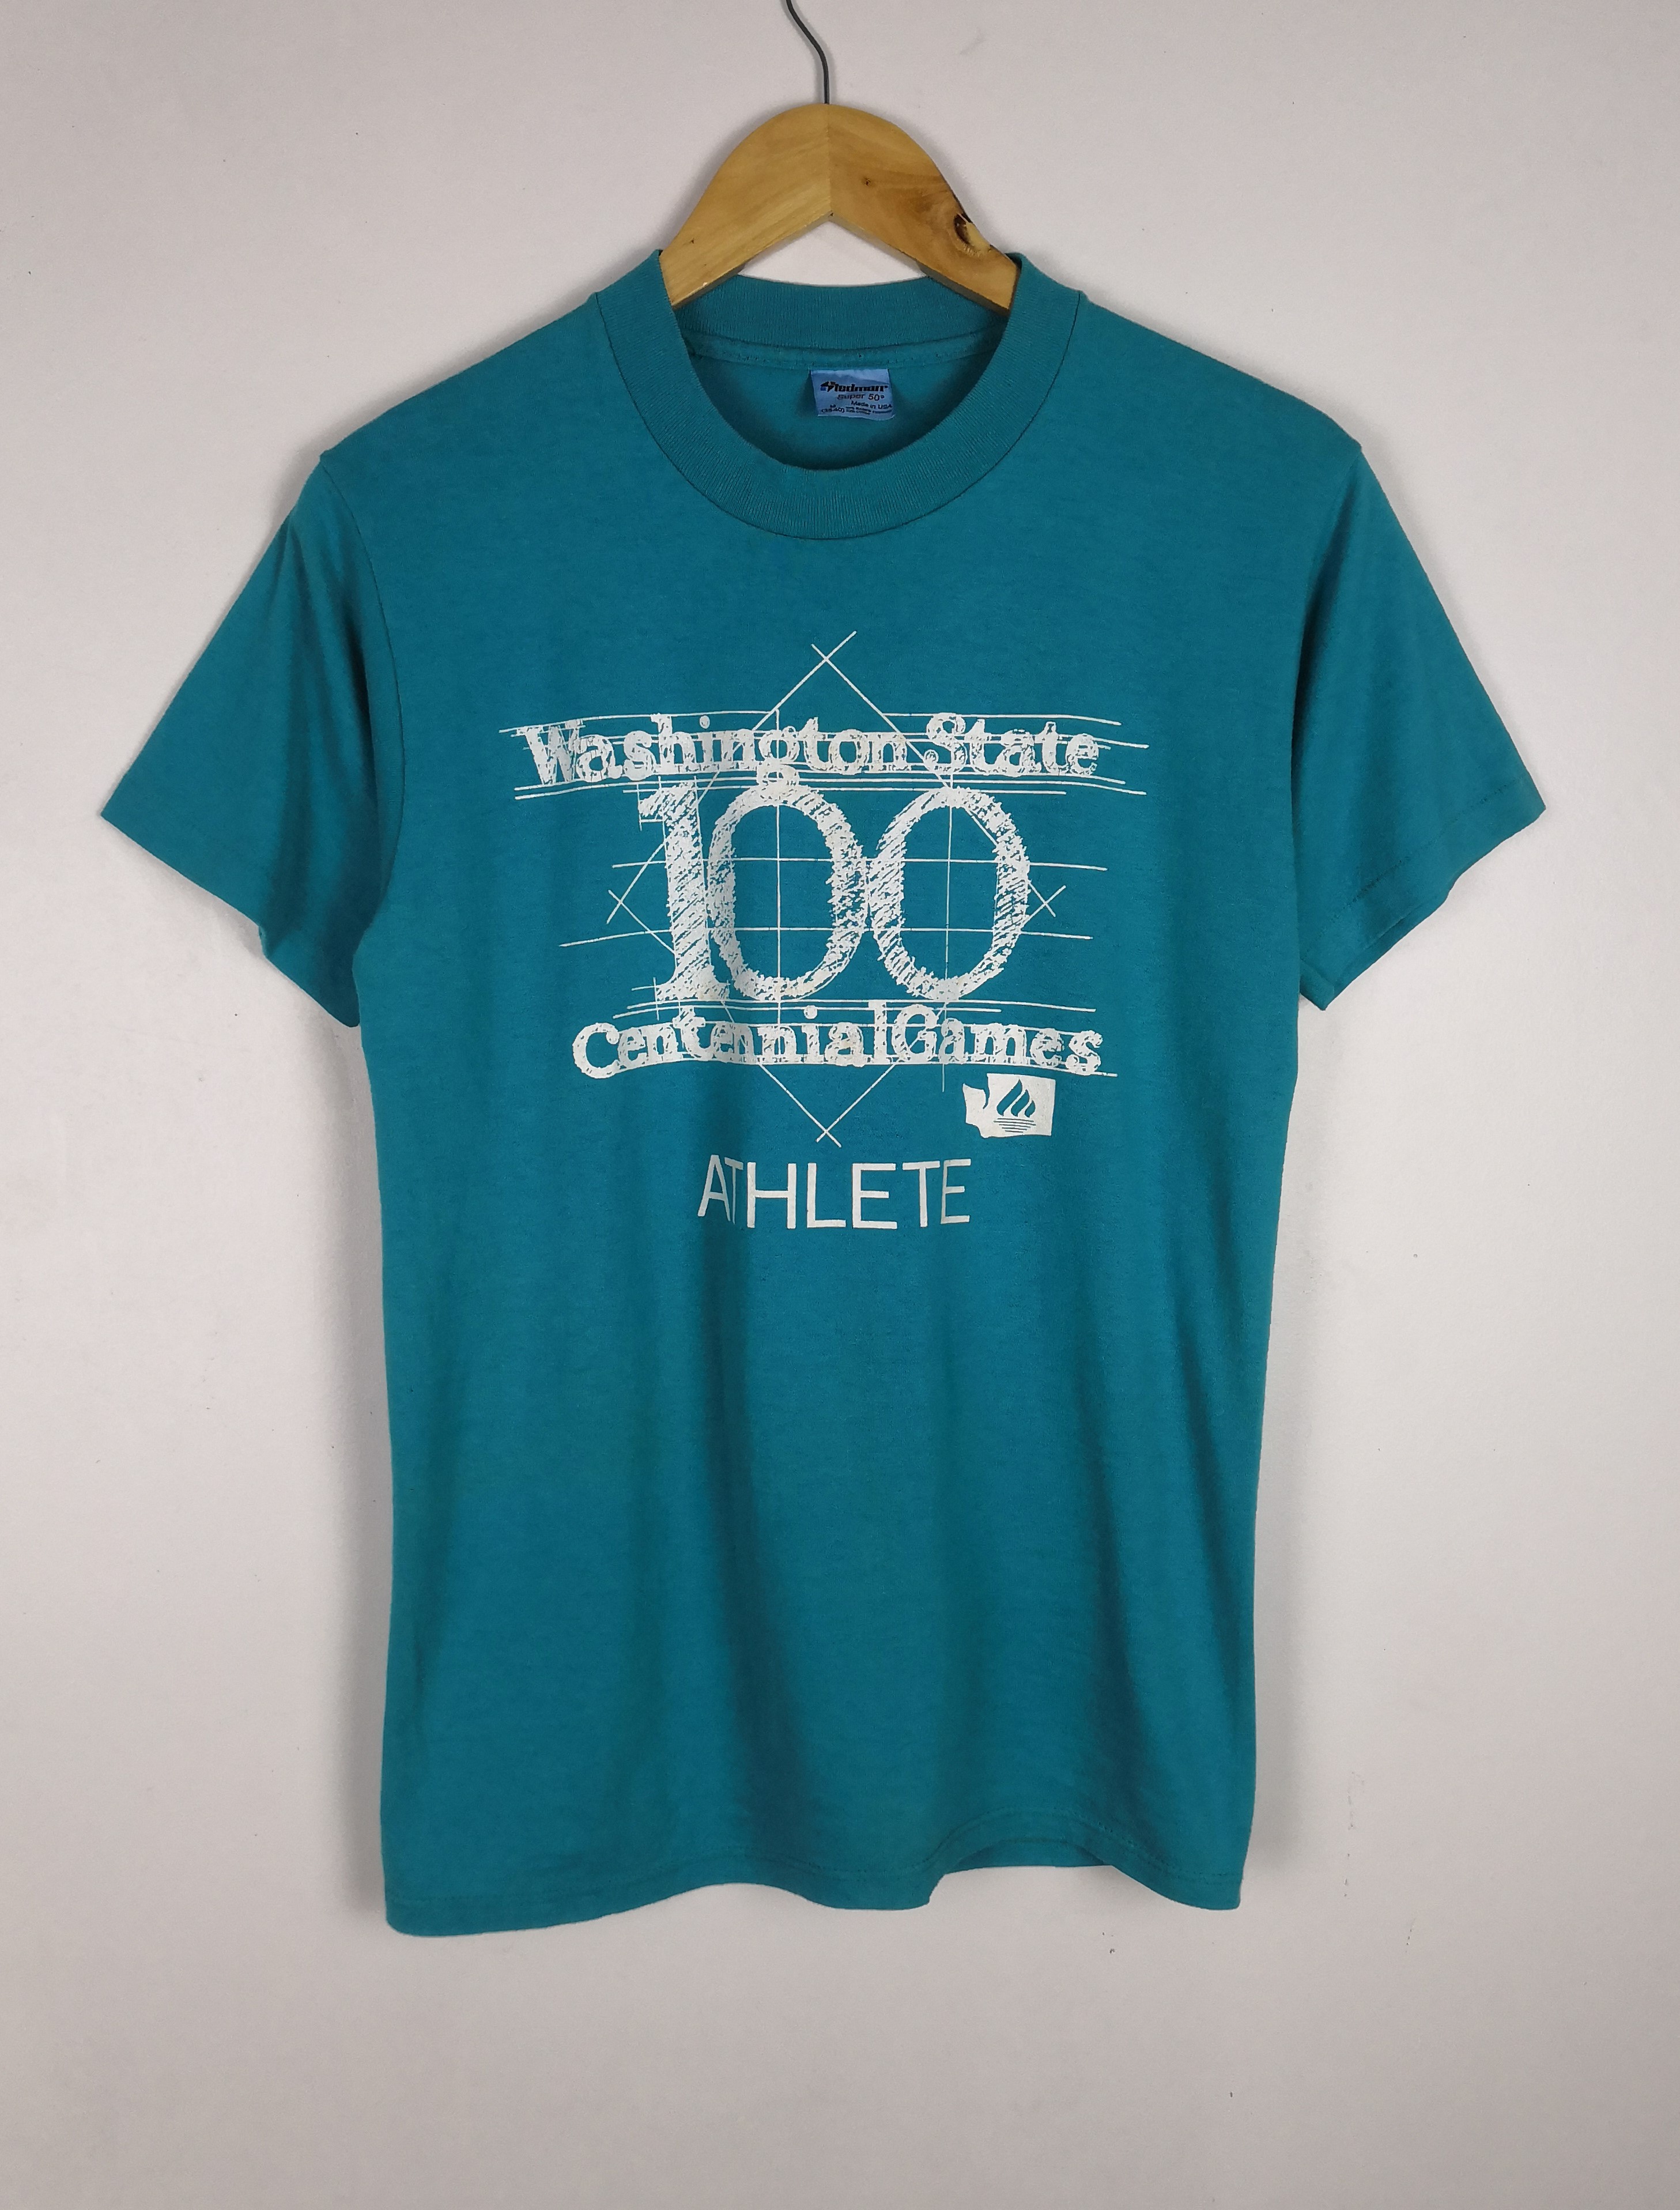 Vintage - True Vintage 90s Washington State Shirt 100 Centennial Games Athlete. - 1